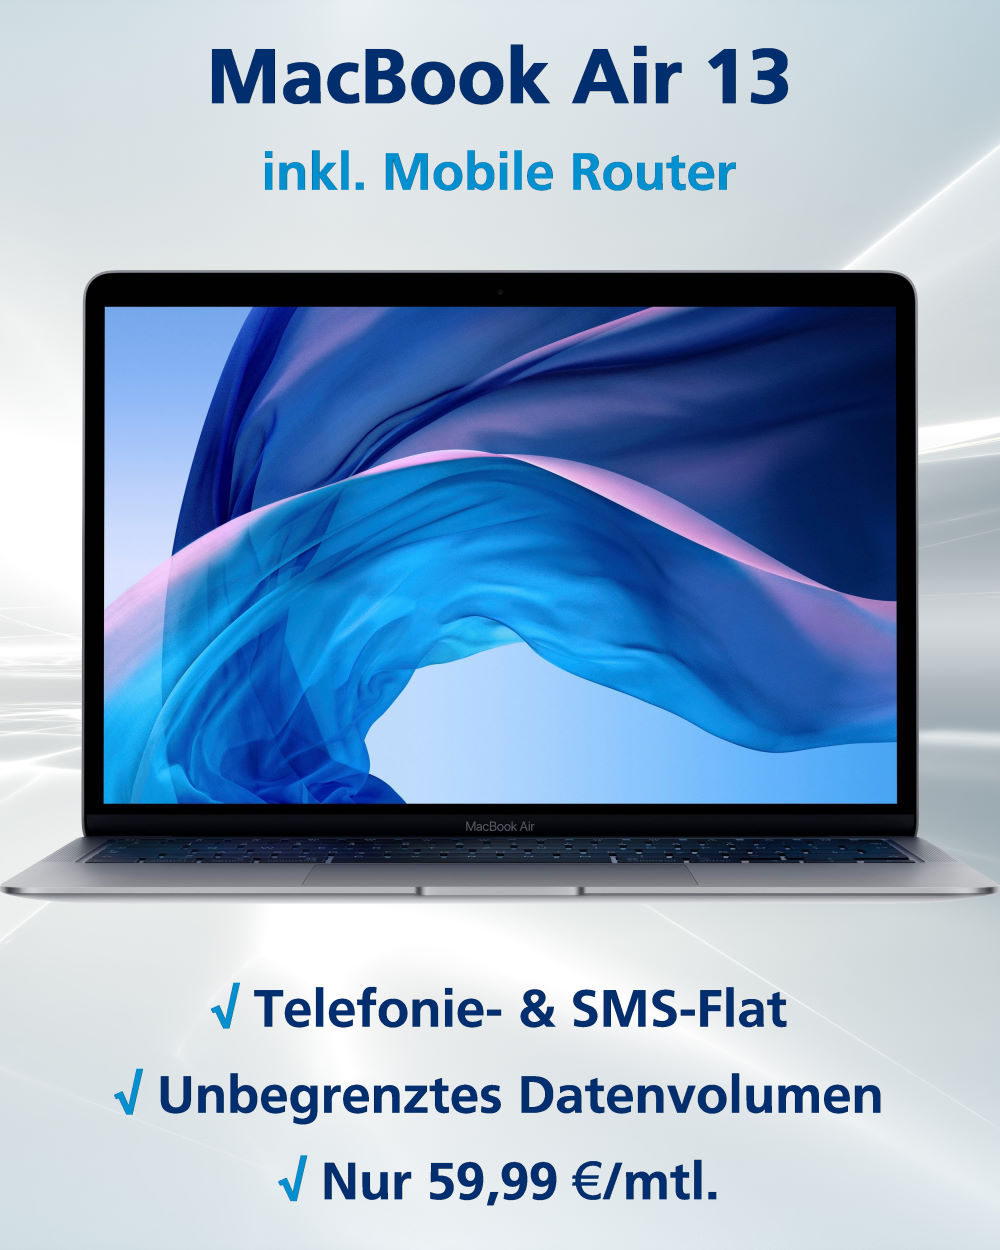 MacBook Air 13 Handyvertrag inkl. Mobile Router und Unlimited-Flat